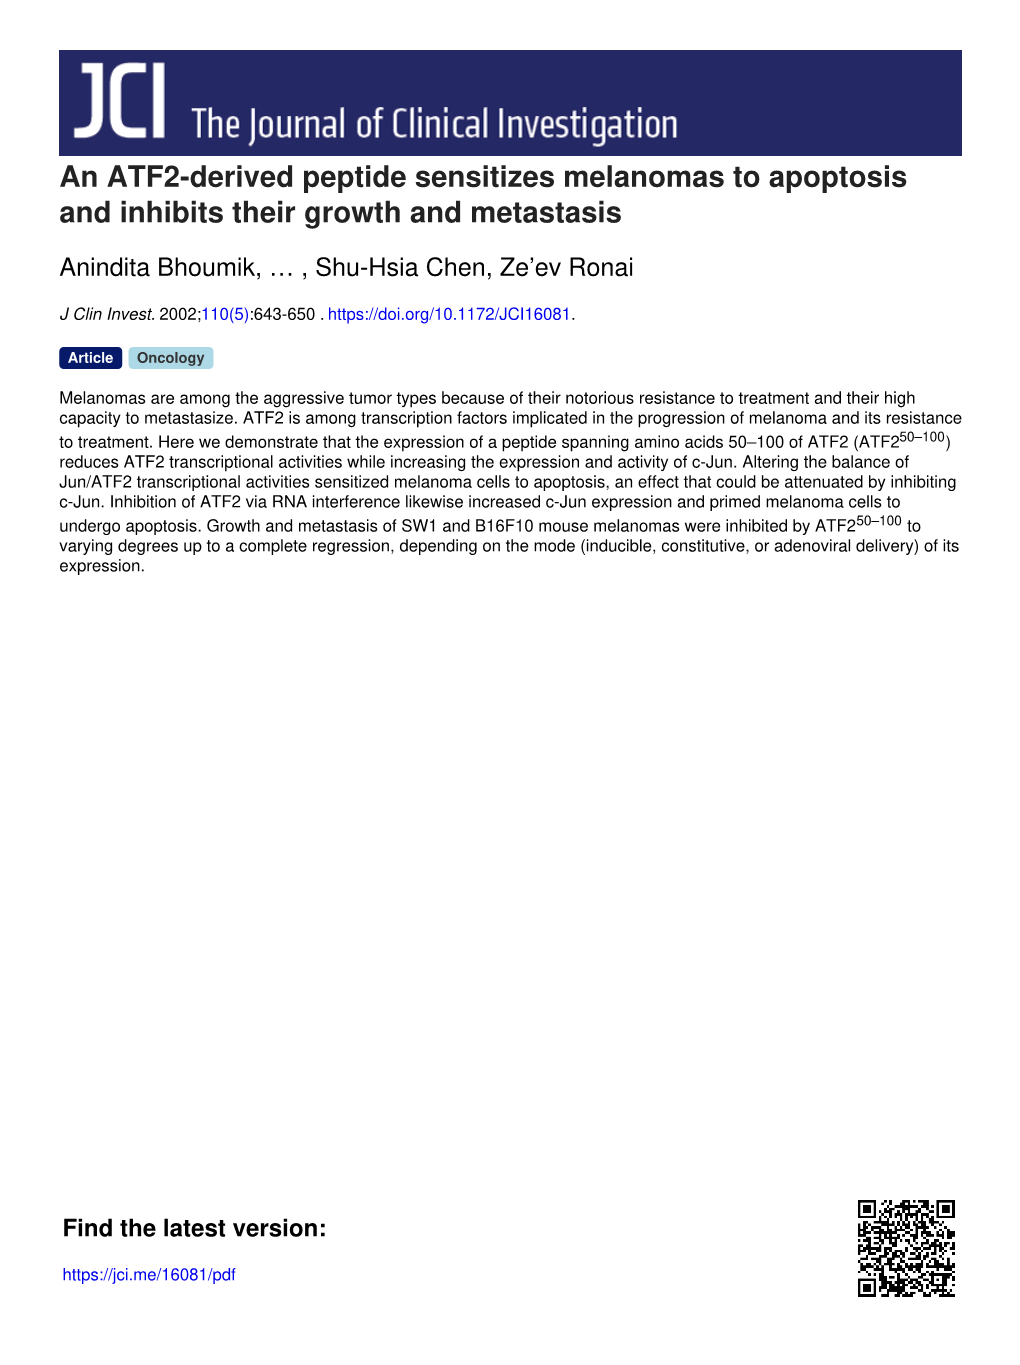 An ATF2-Derived Peptide Sensitizes Melanomas to Apoptosis and Inhibits Their Growth and Metastasis